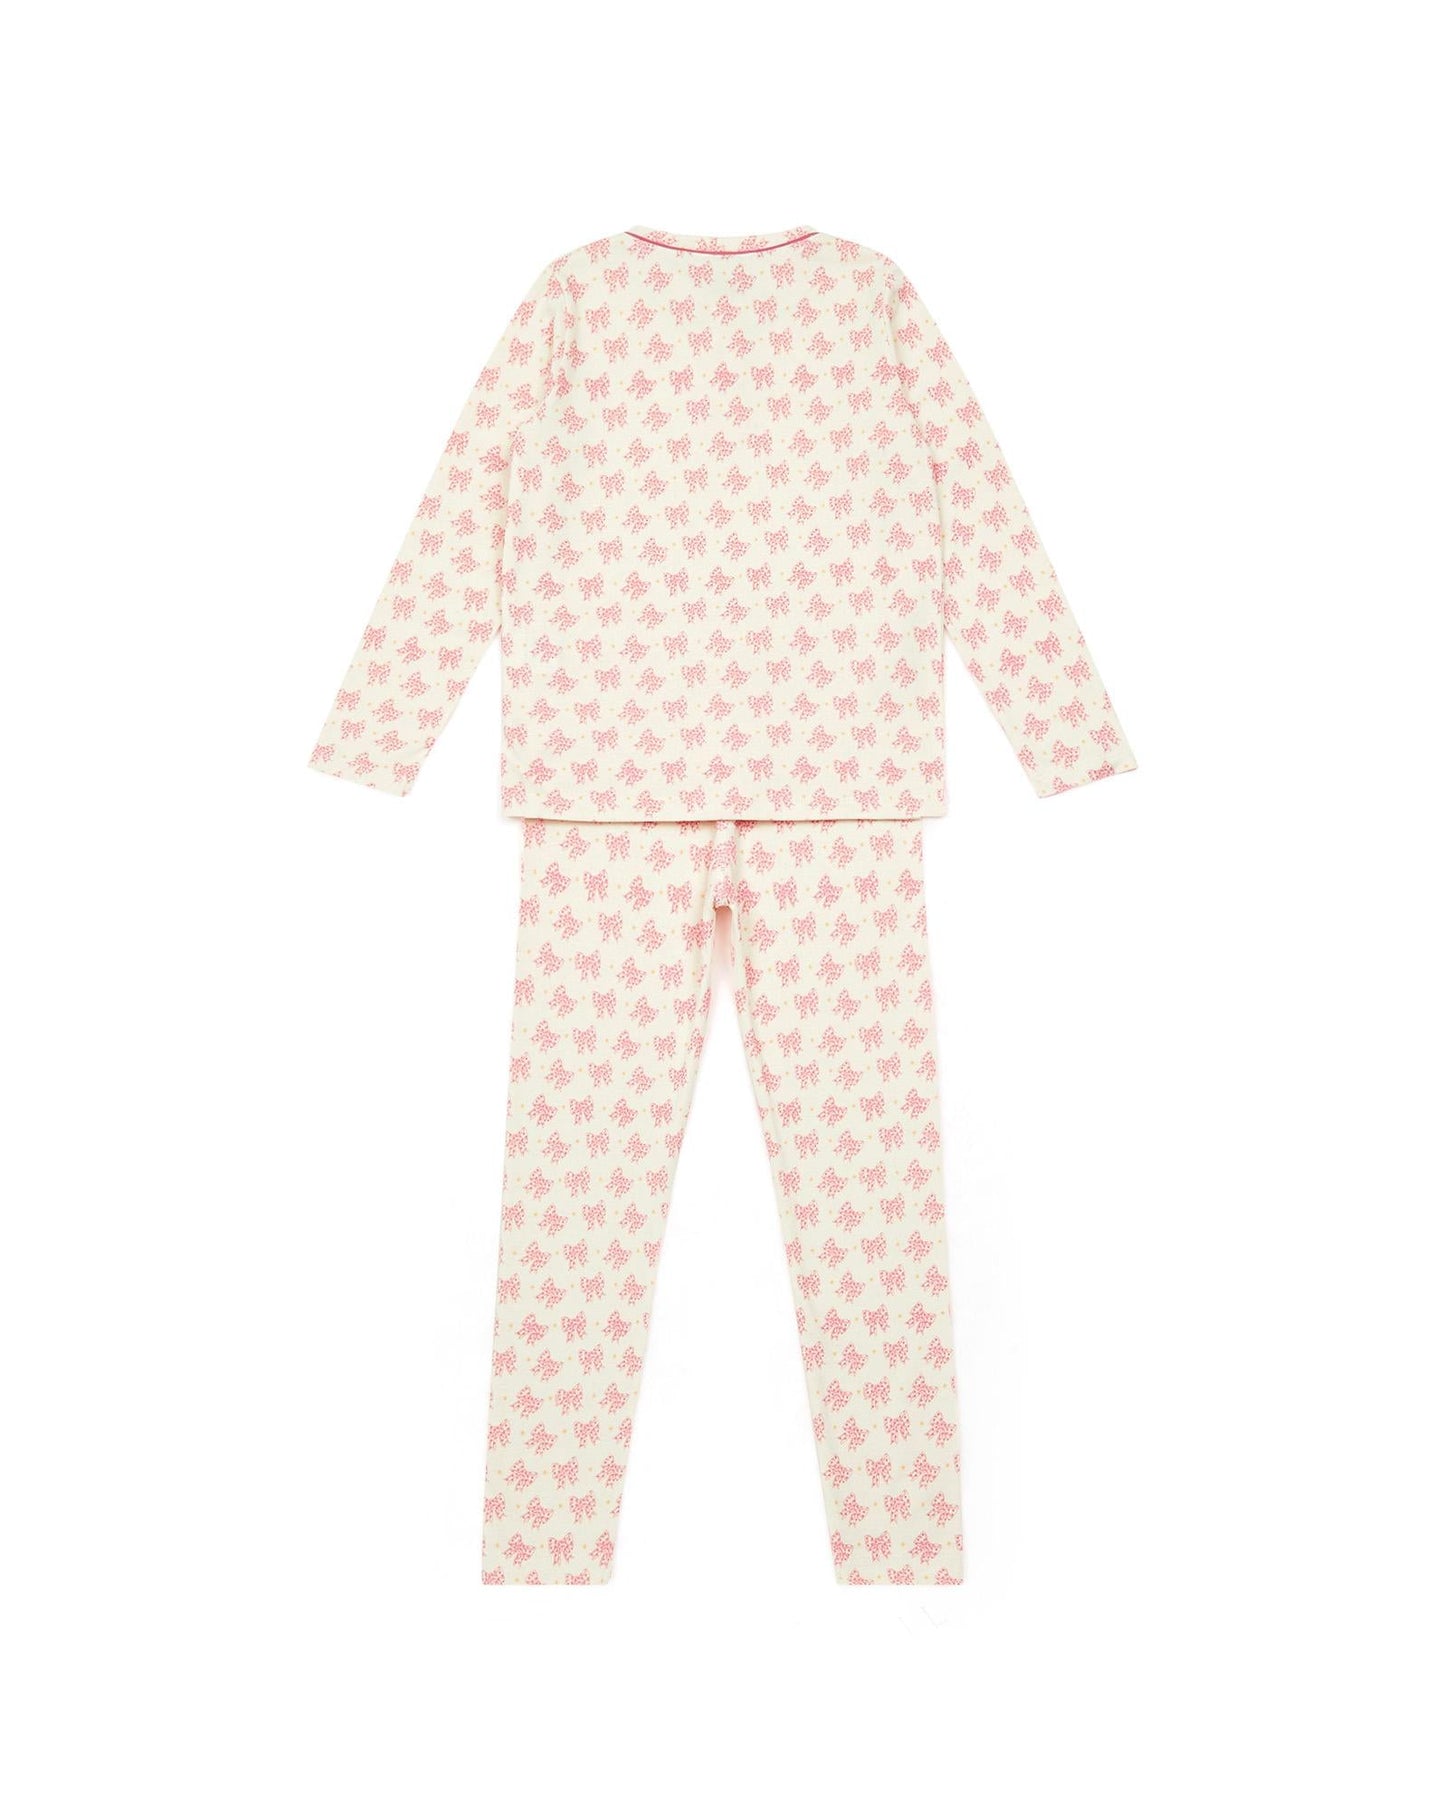 Pyjama - 2 pièces rose coton biologique